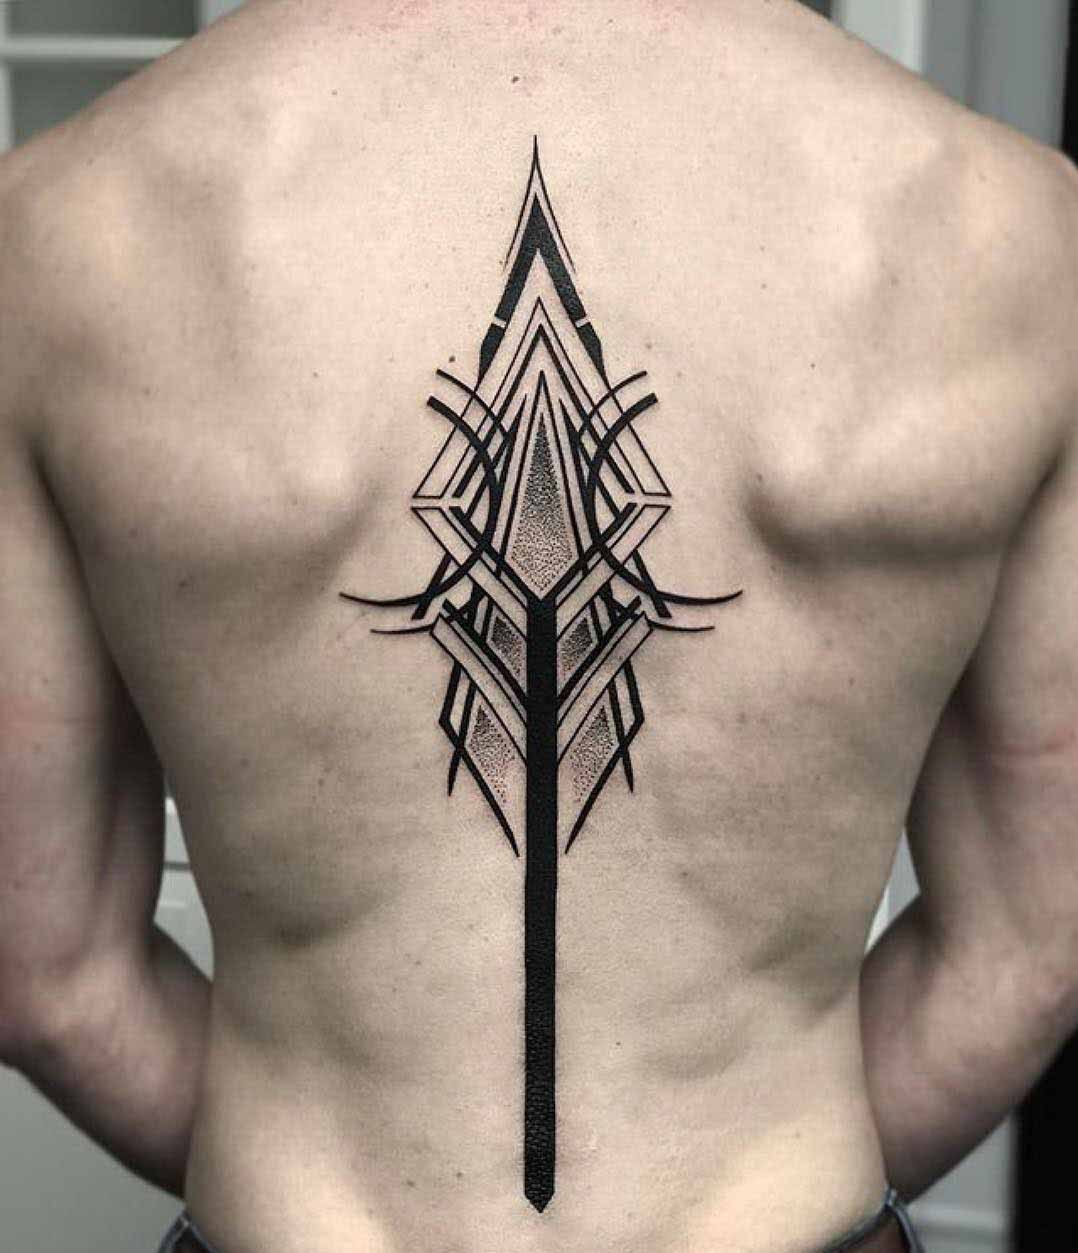 Spine tattoos - Best Tattoo Ideas Gallery